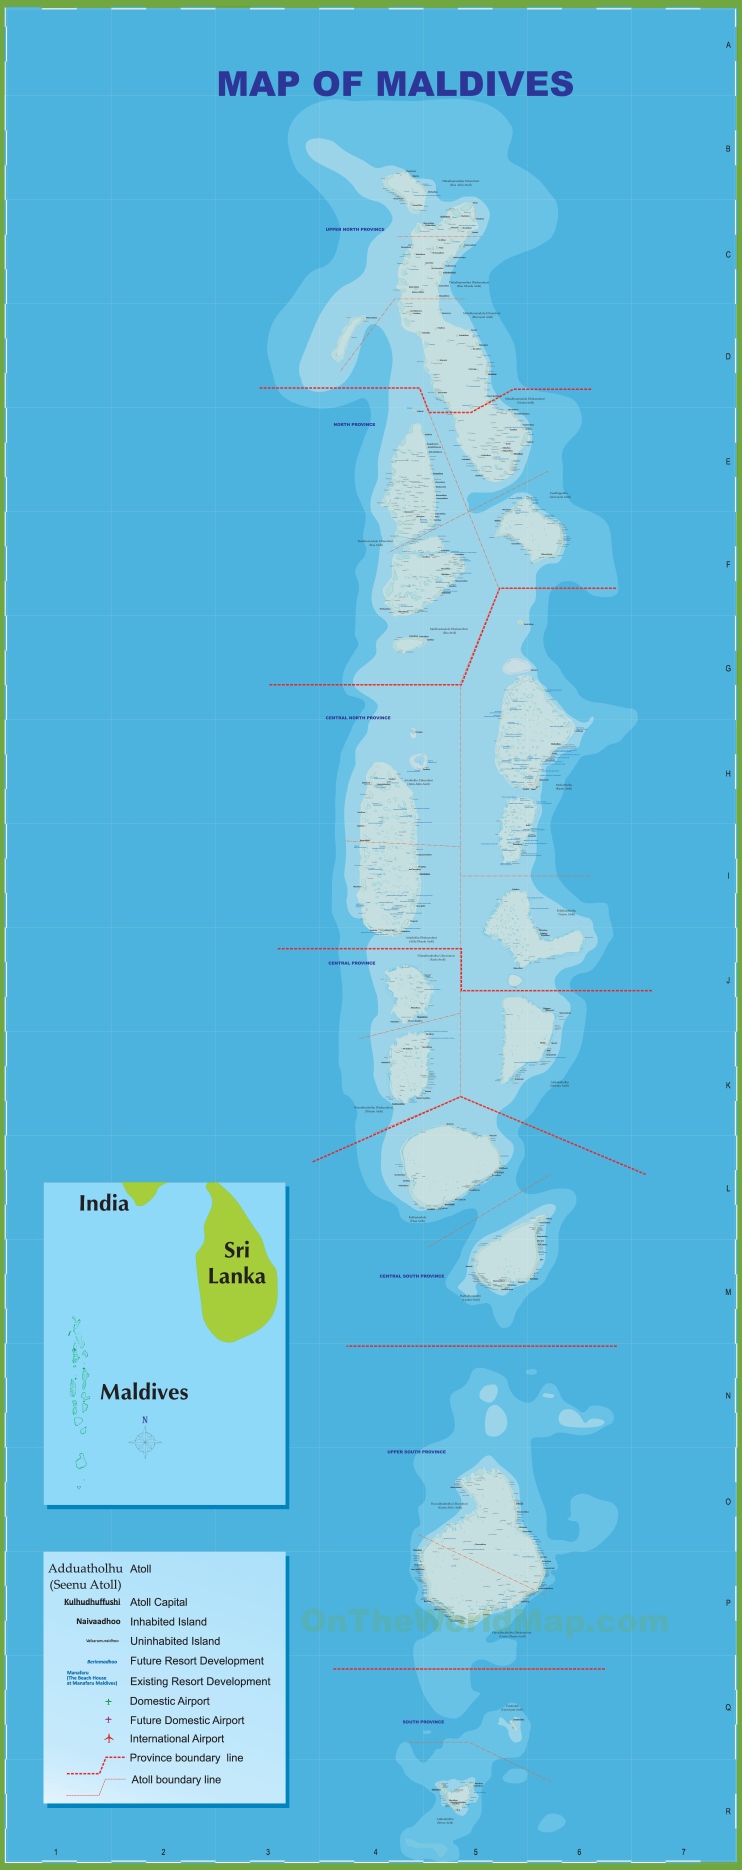 Administrative divisions map of Maldives